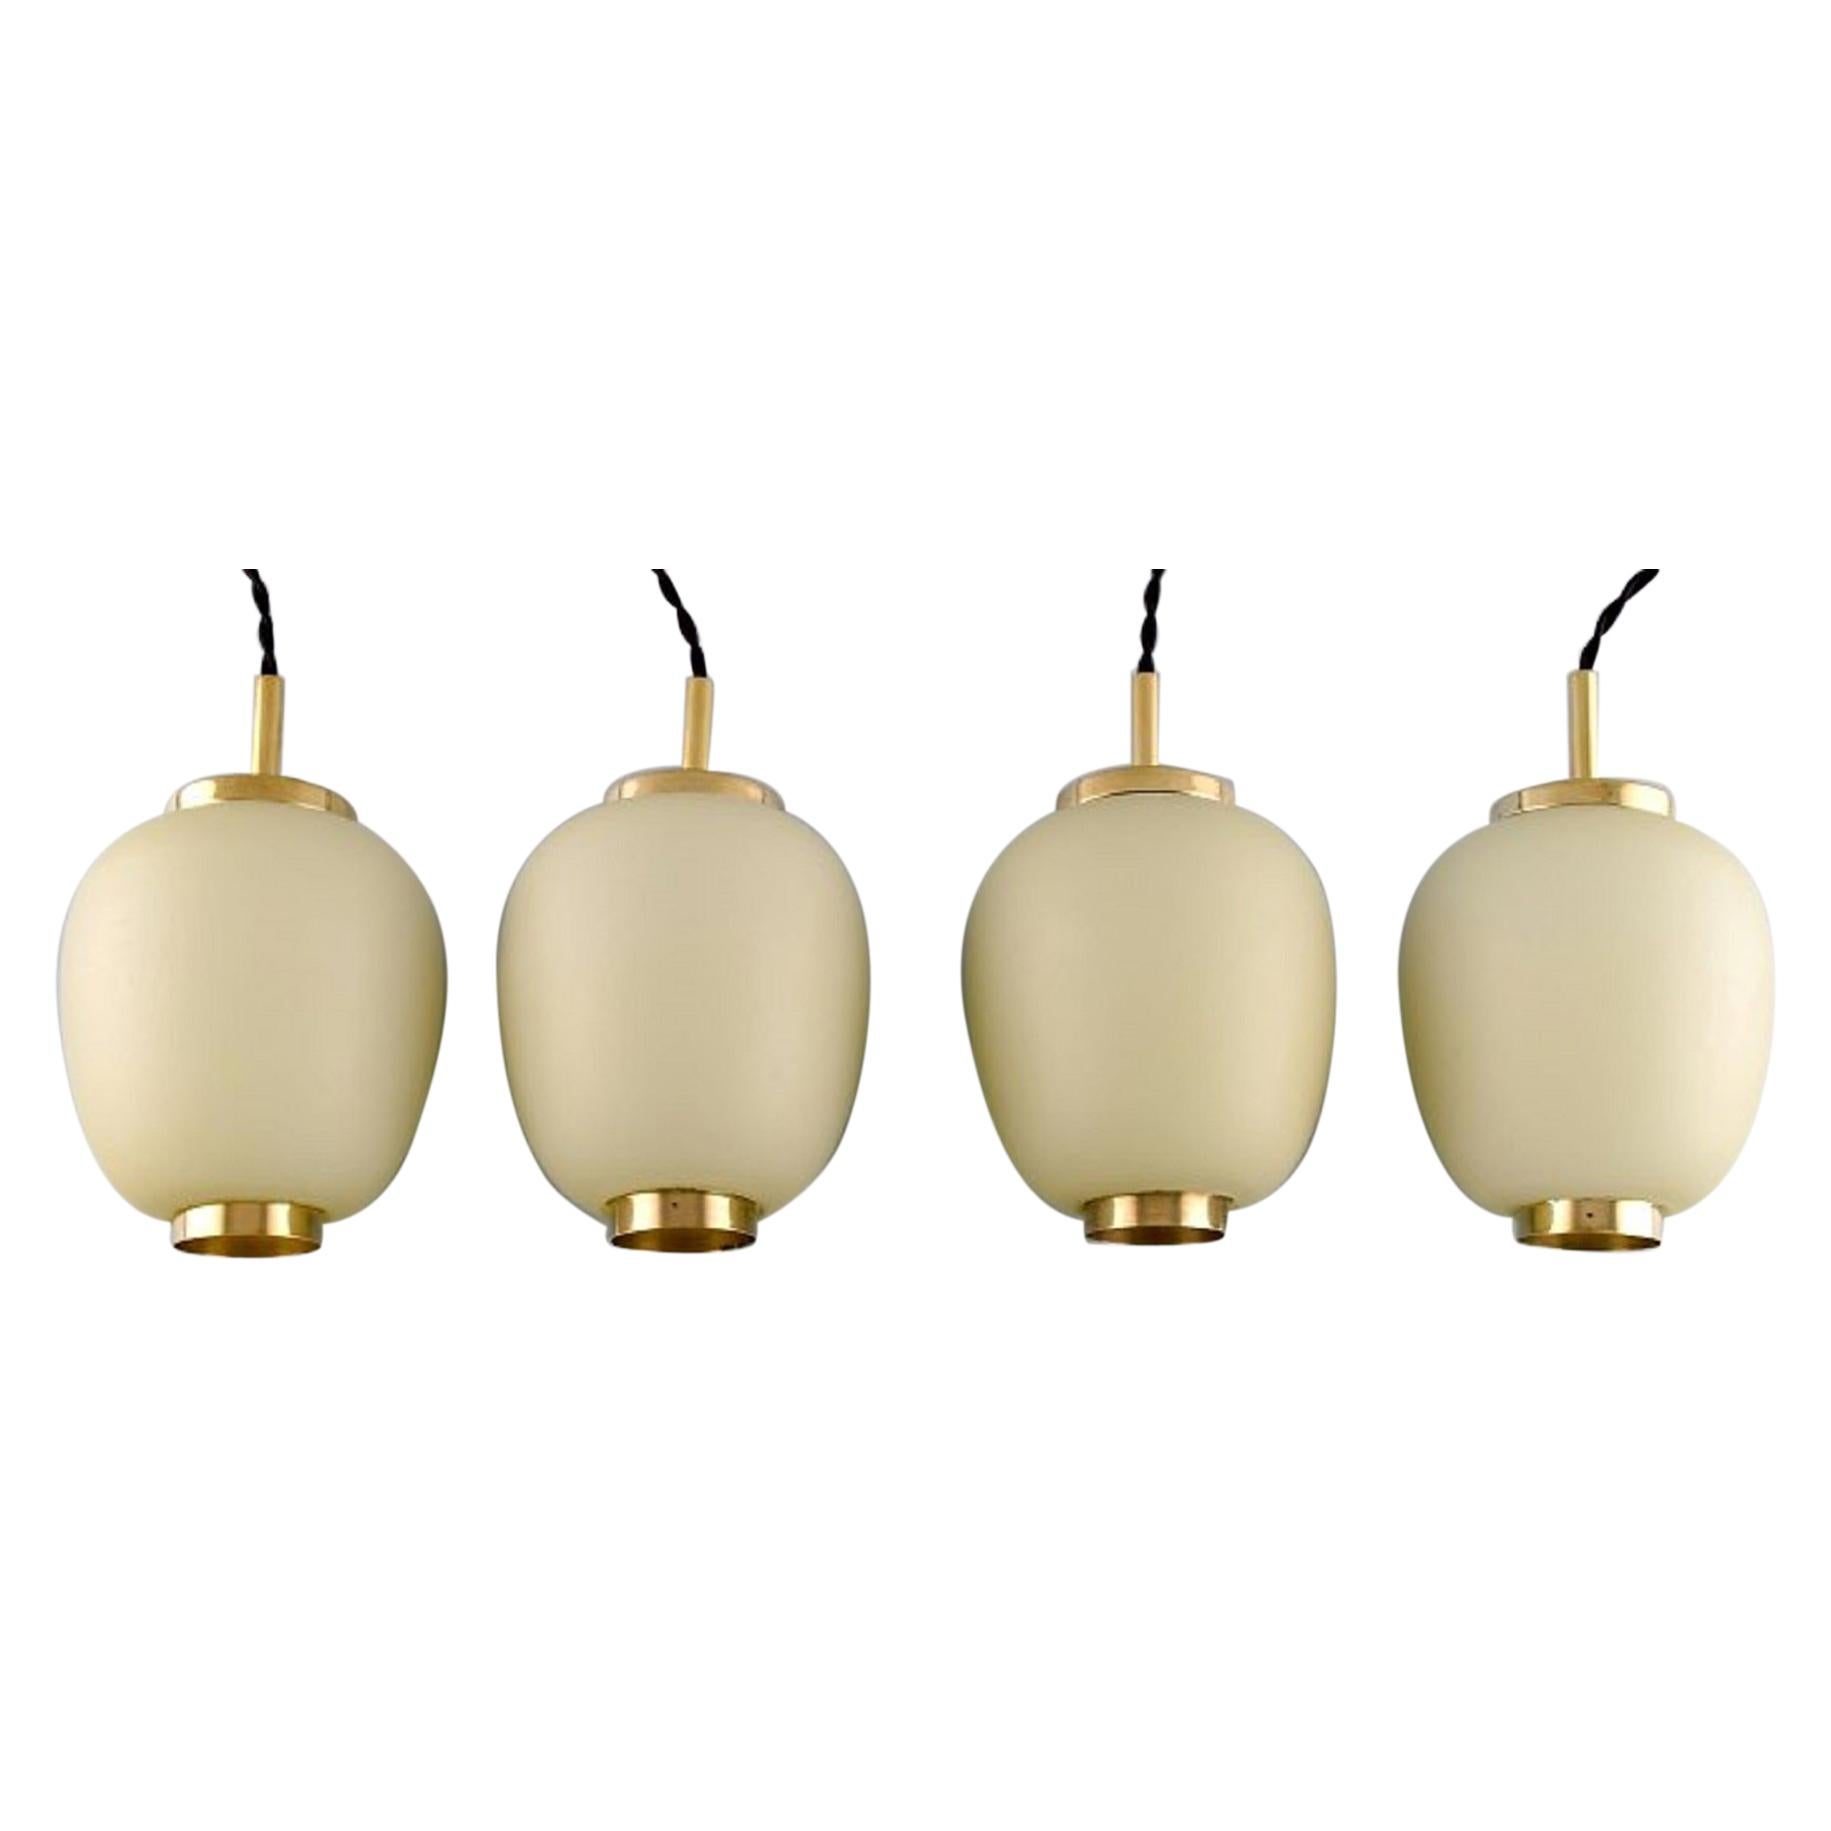 Danish Design, Four China Lamps or Pendants Made of Matt Opal Glass, 1960s